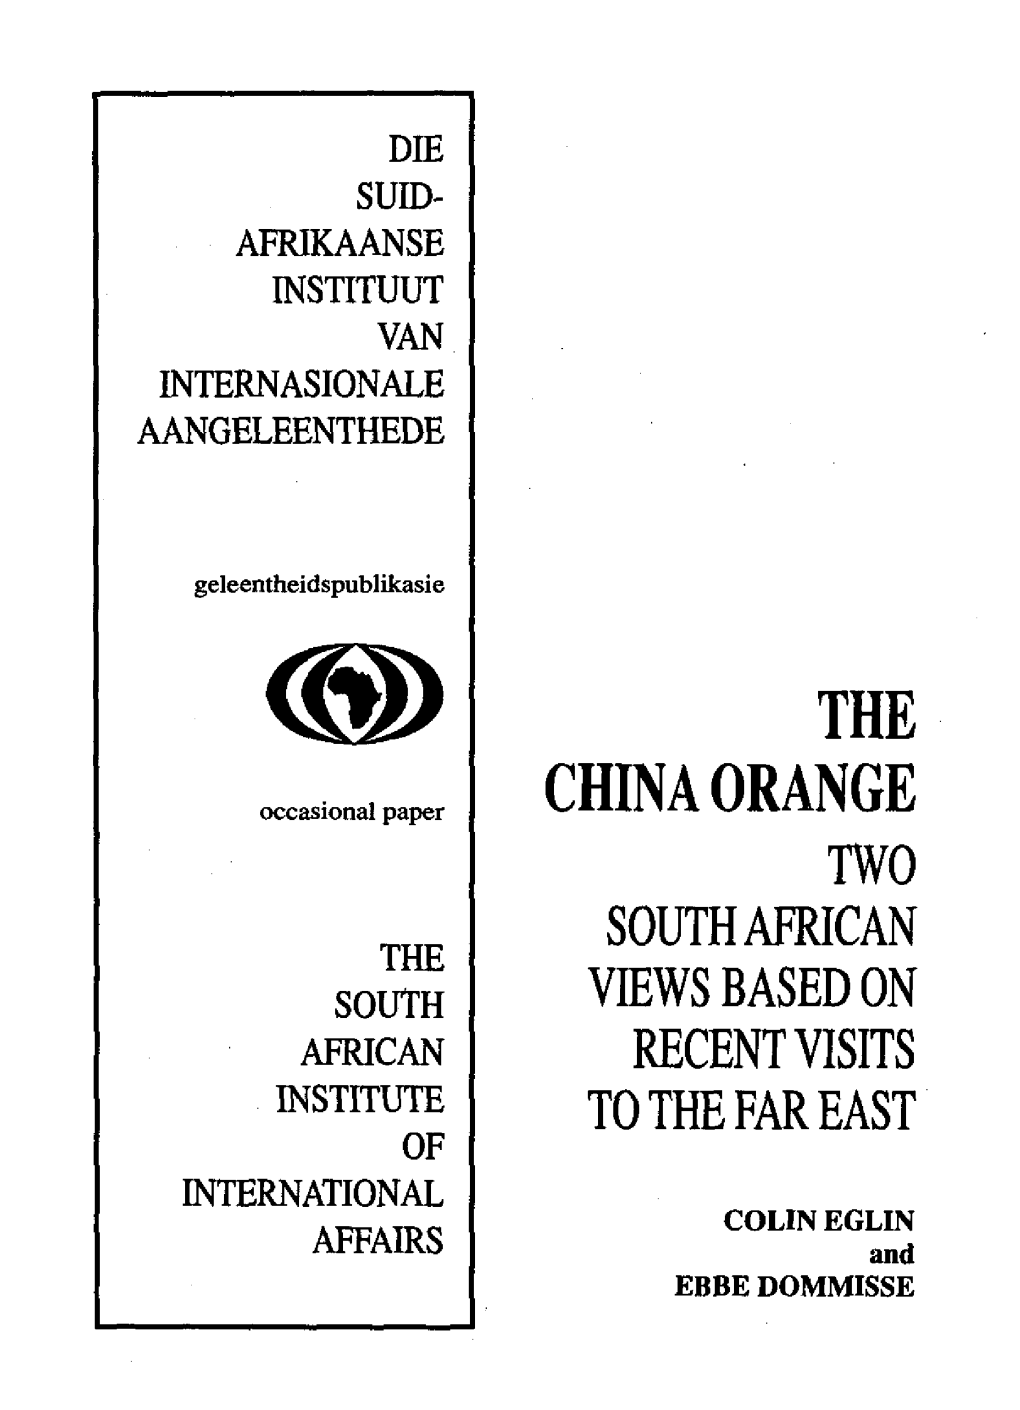 The China Orange